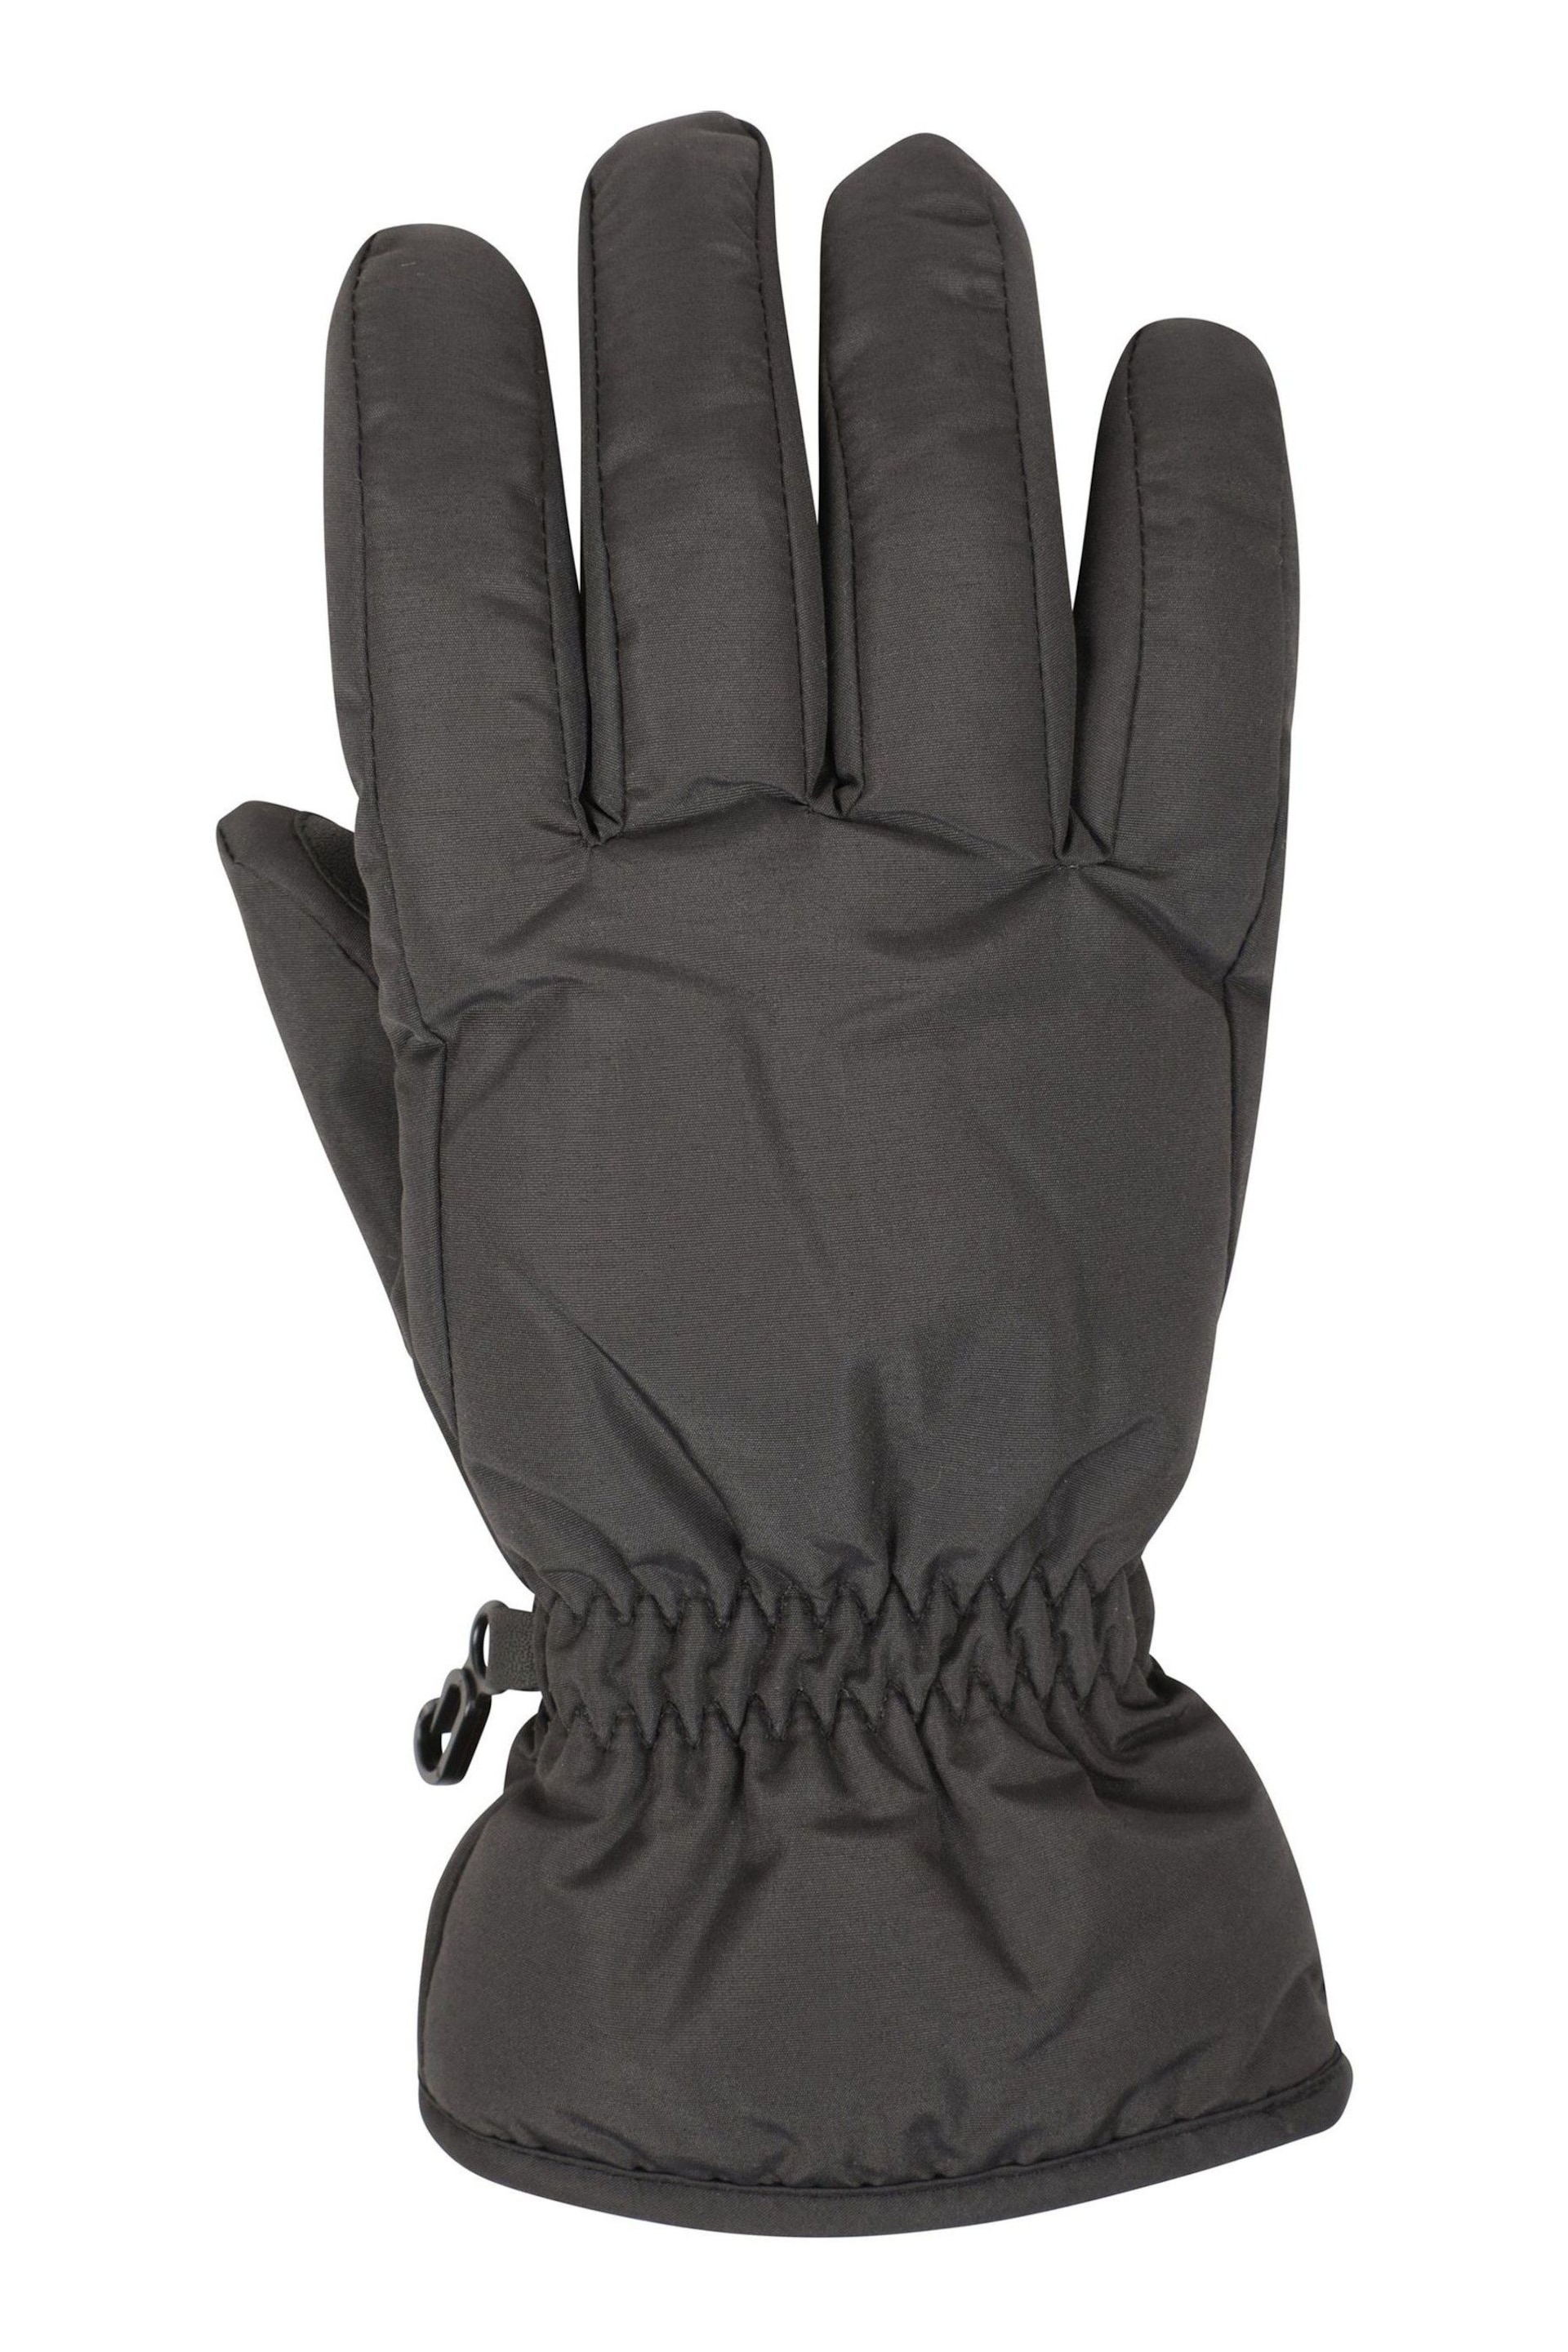 Mountain Warehouse Black Womens Ski Gloves - Image 2 of 5